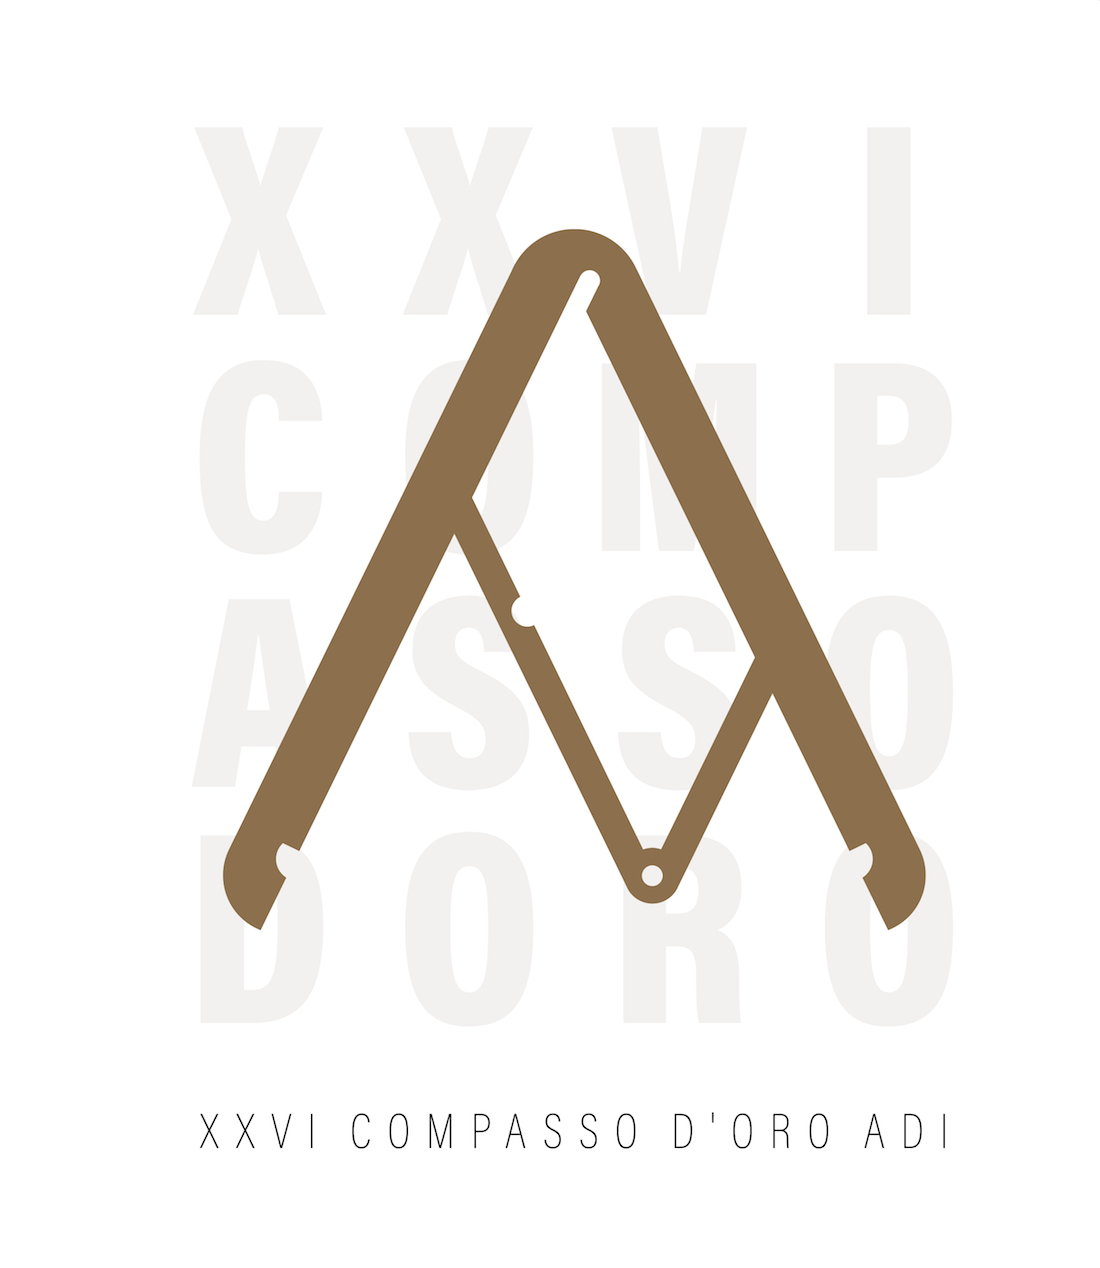 01-ADI XXVI Compasso d Oro-wow-webmagazine